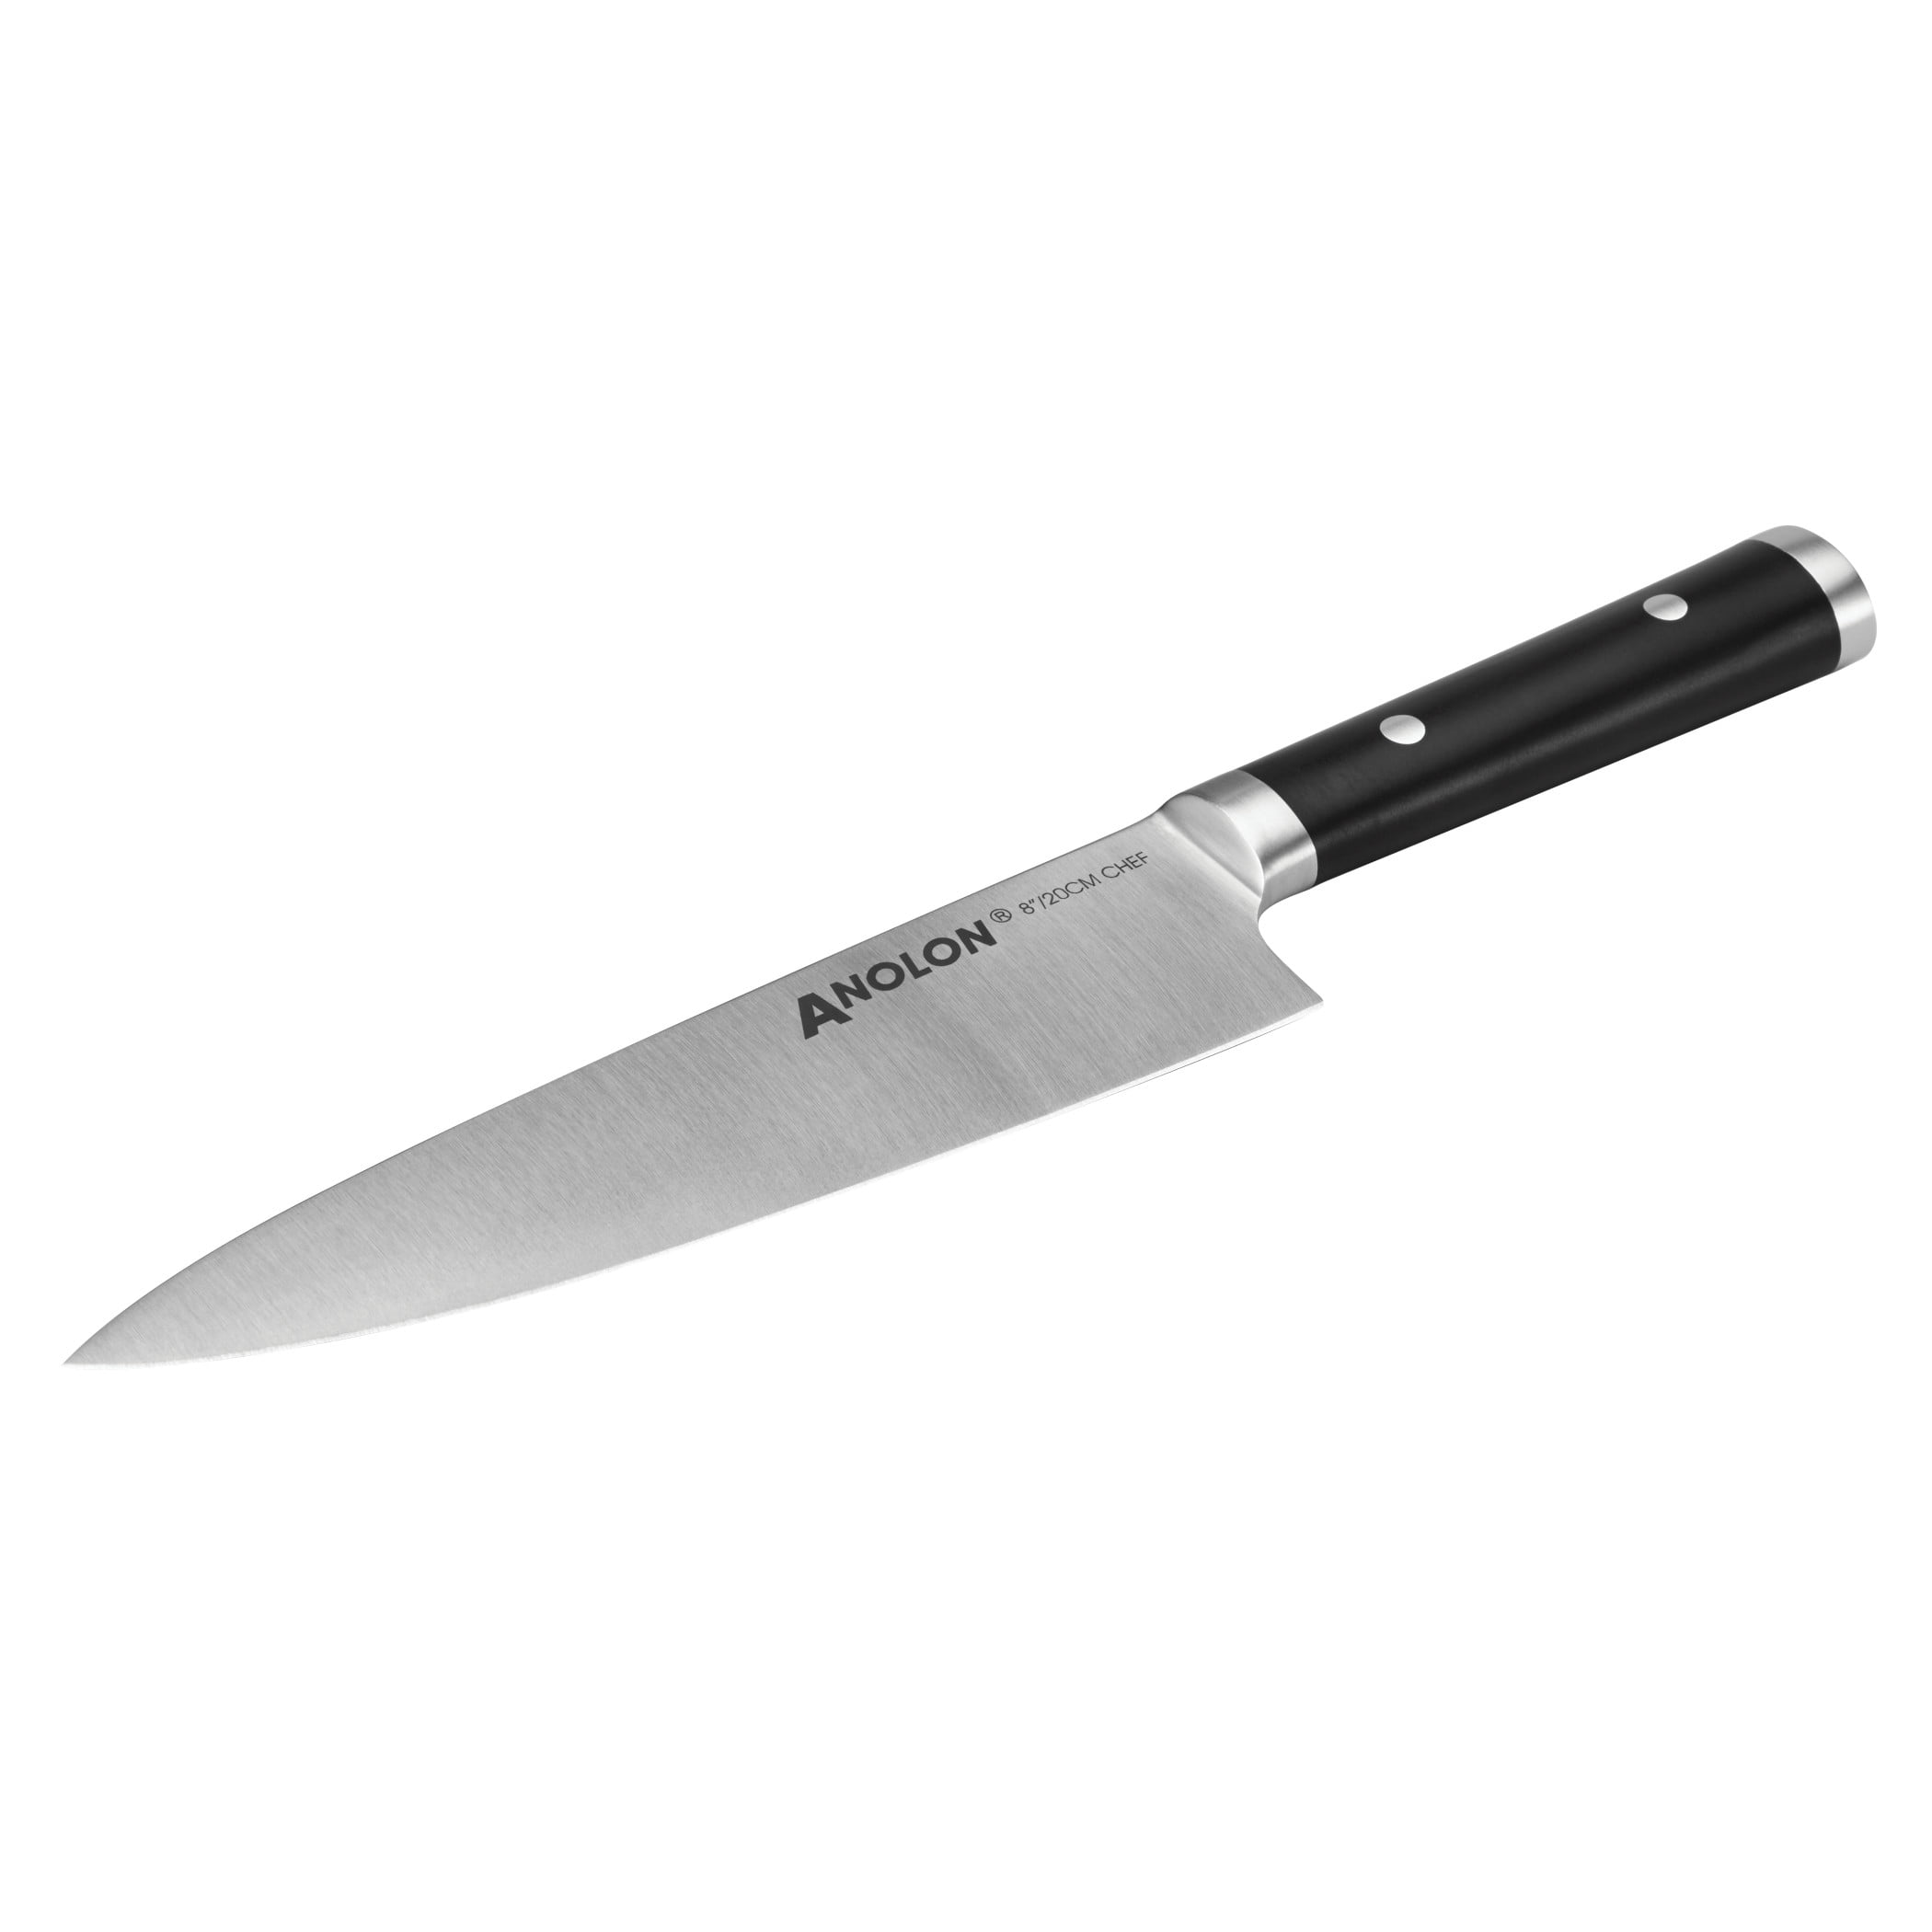 Anolon 47995 AlwaysSharp Japanese Steel Knife Block Set with Built-In  Sharpener, 1 - Food 4 Less